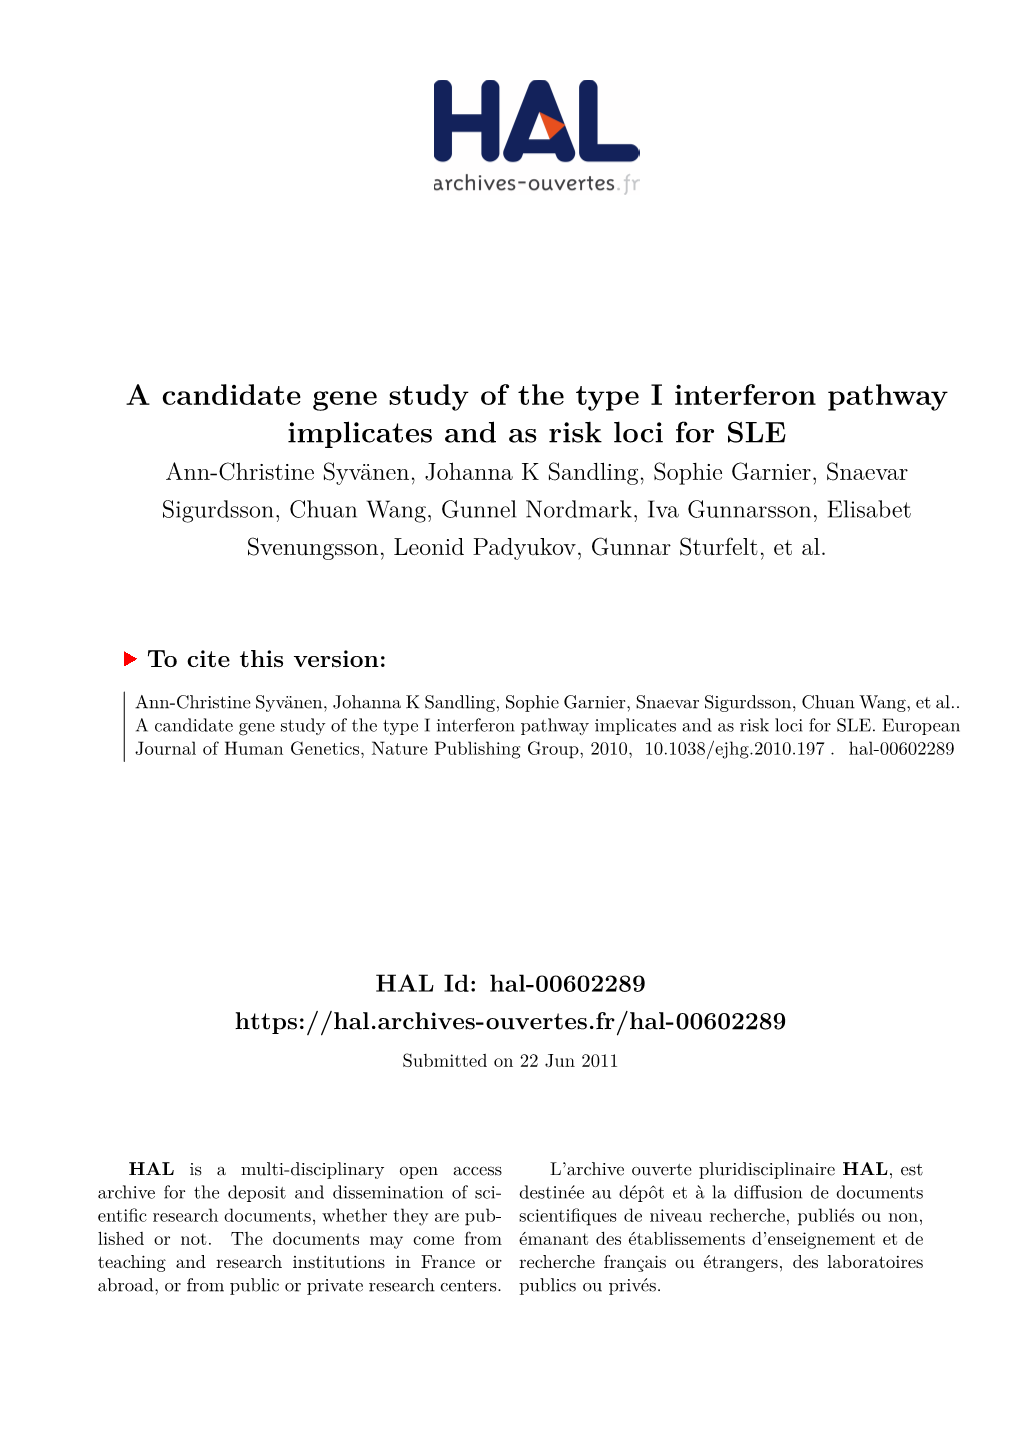 A Candidate Gene Study of the Type I Interferon Pathway Implicates